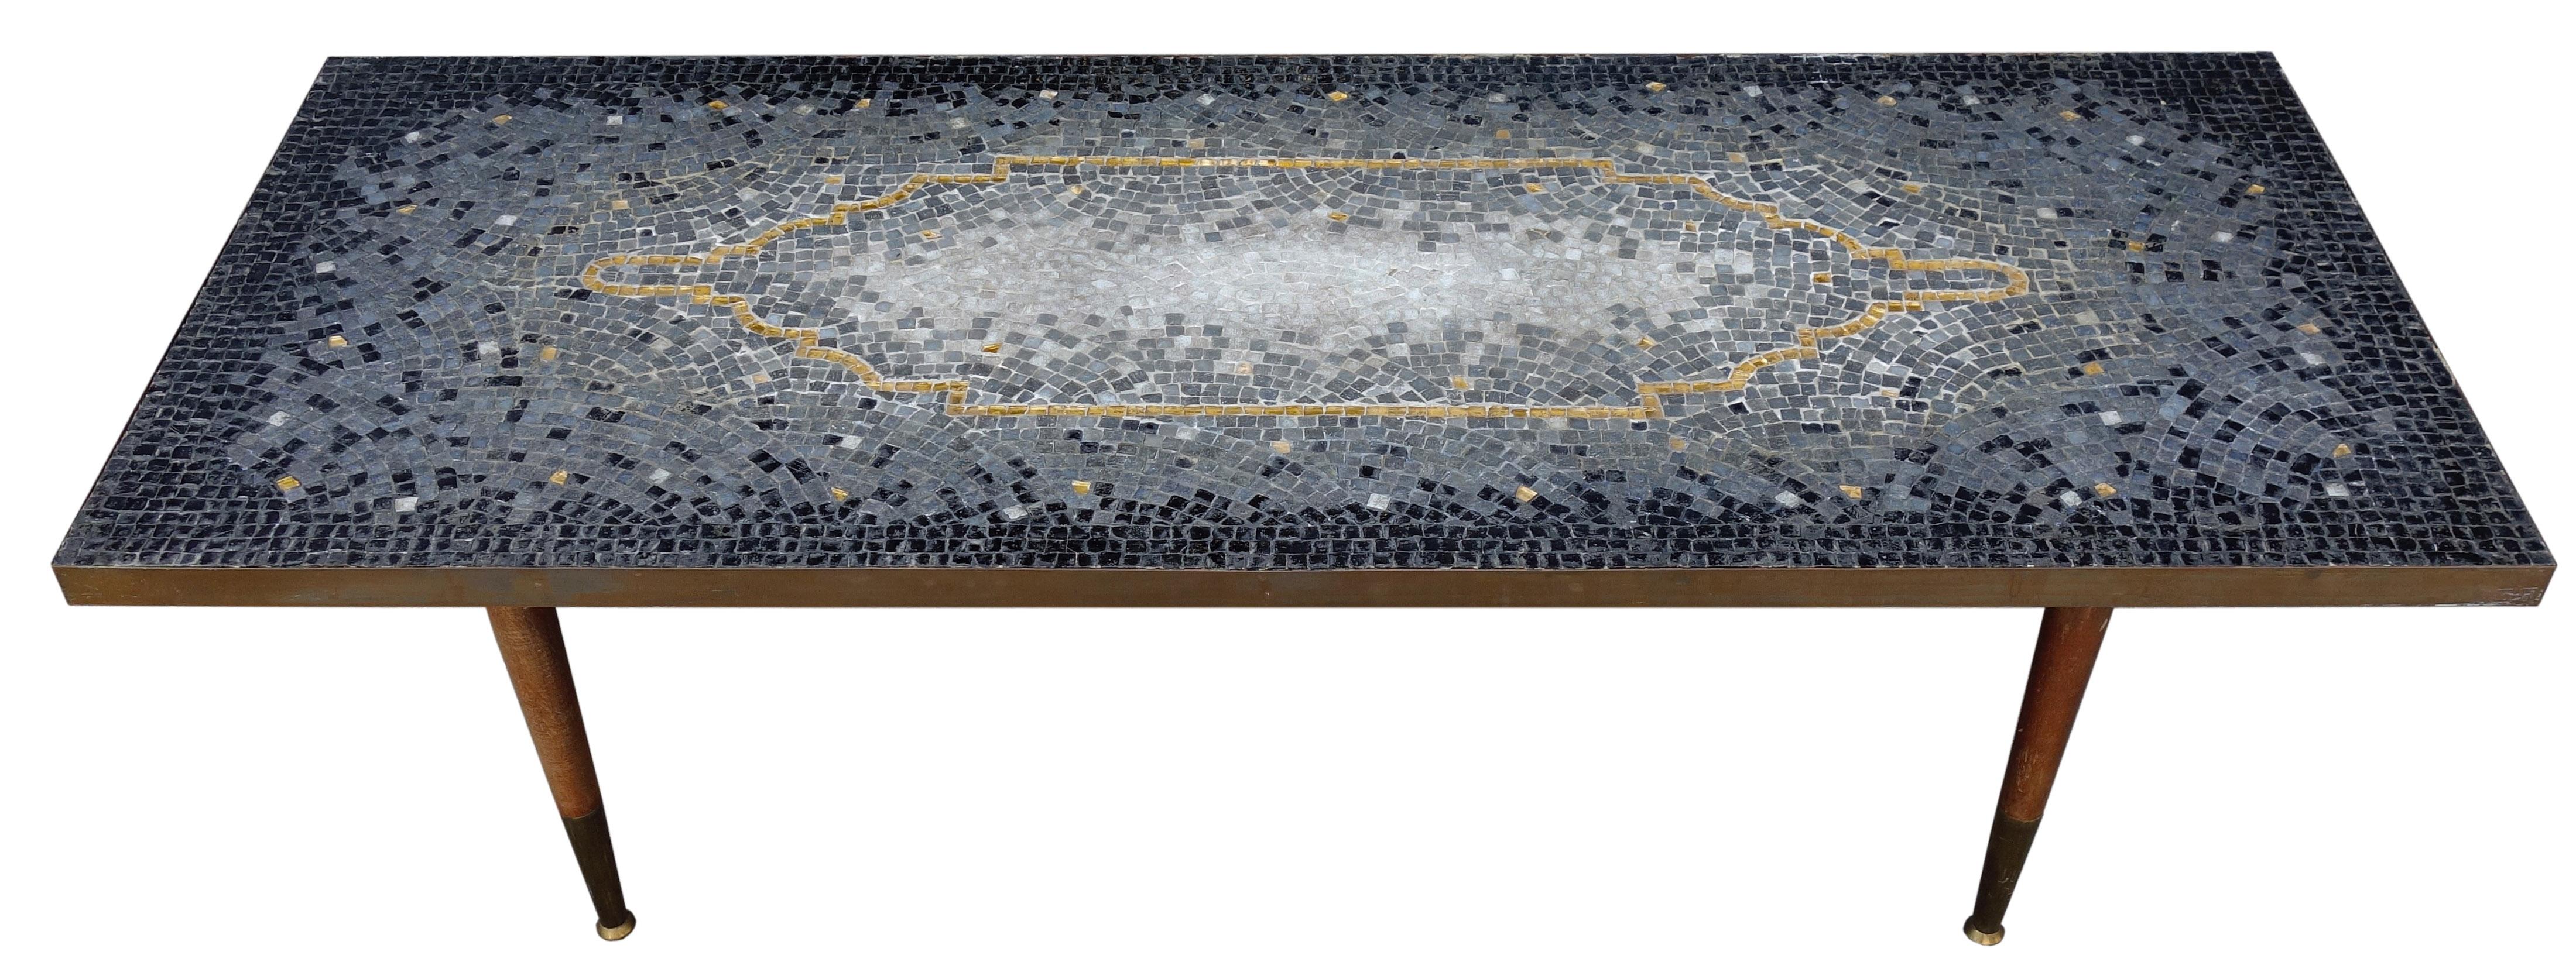 alexandria mosaic coffee table